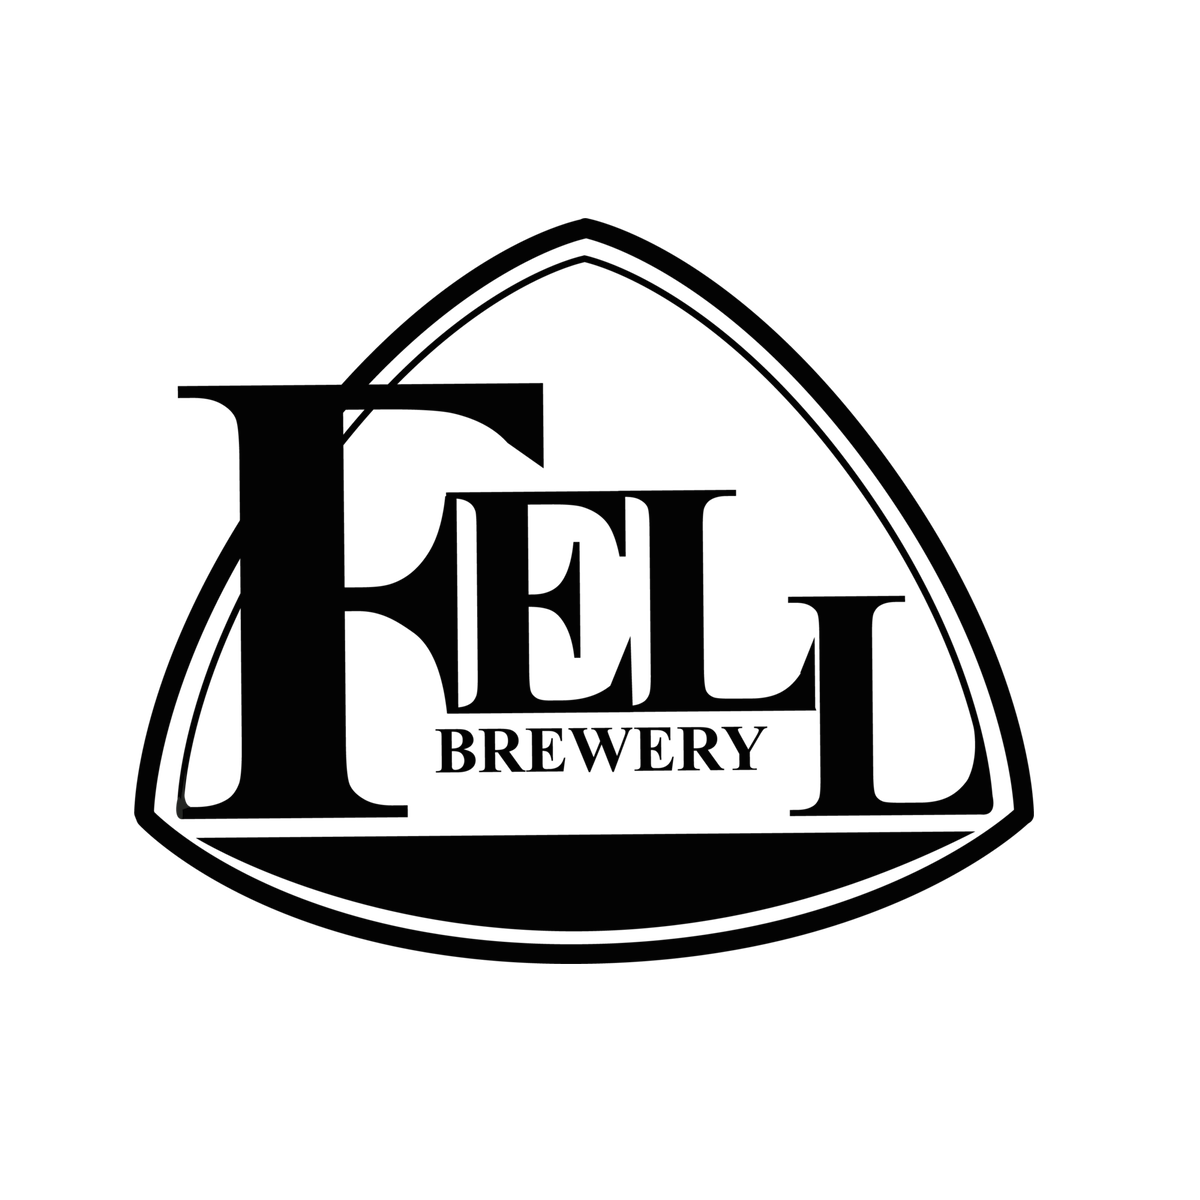 Fell Brewery brand logo